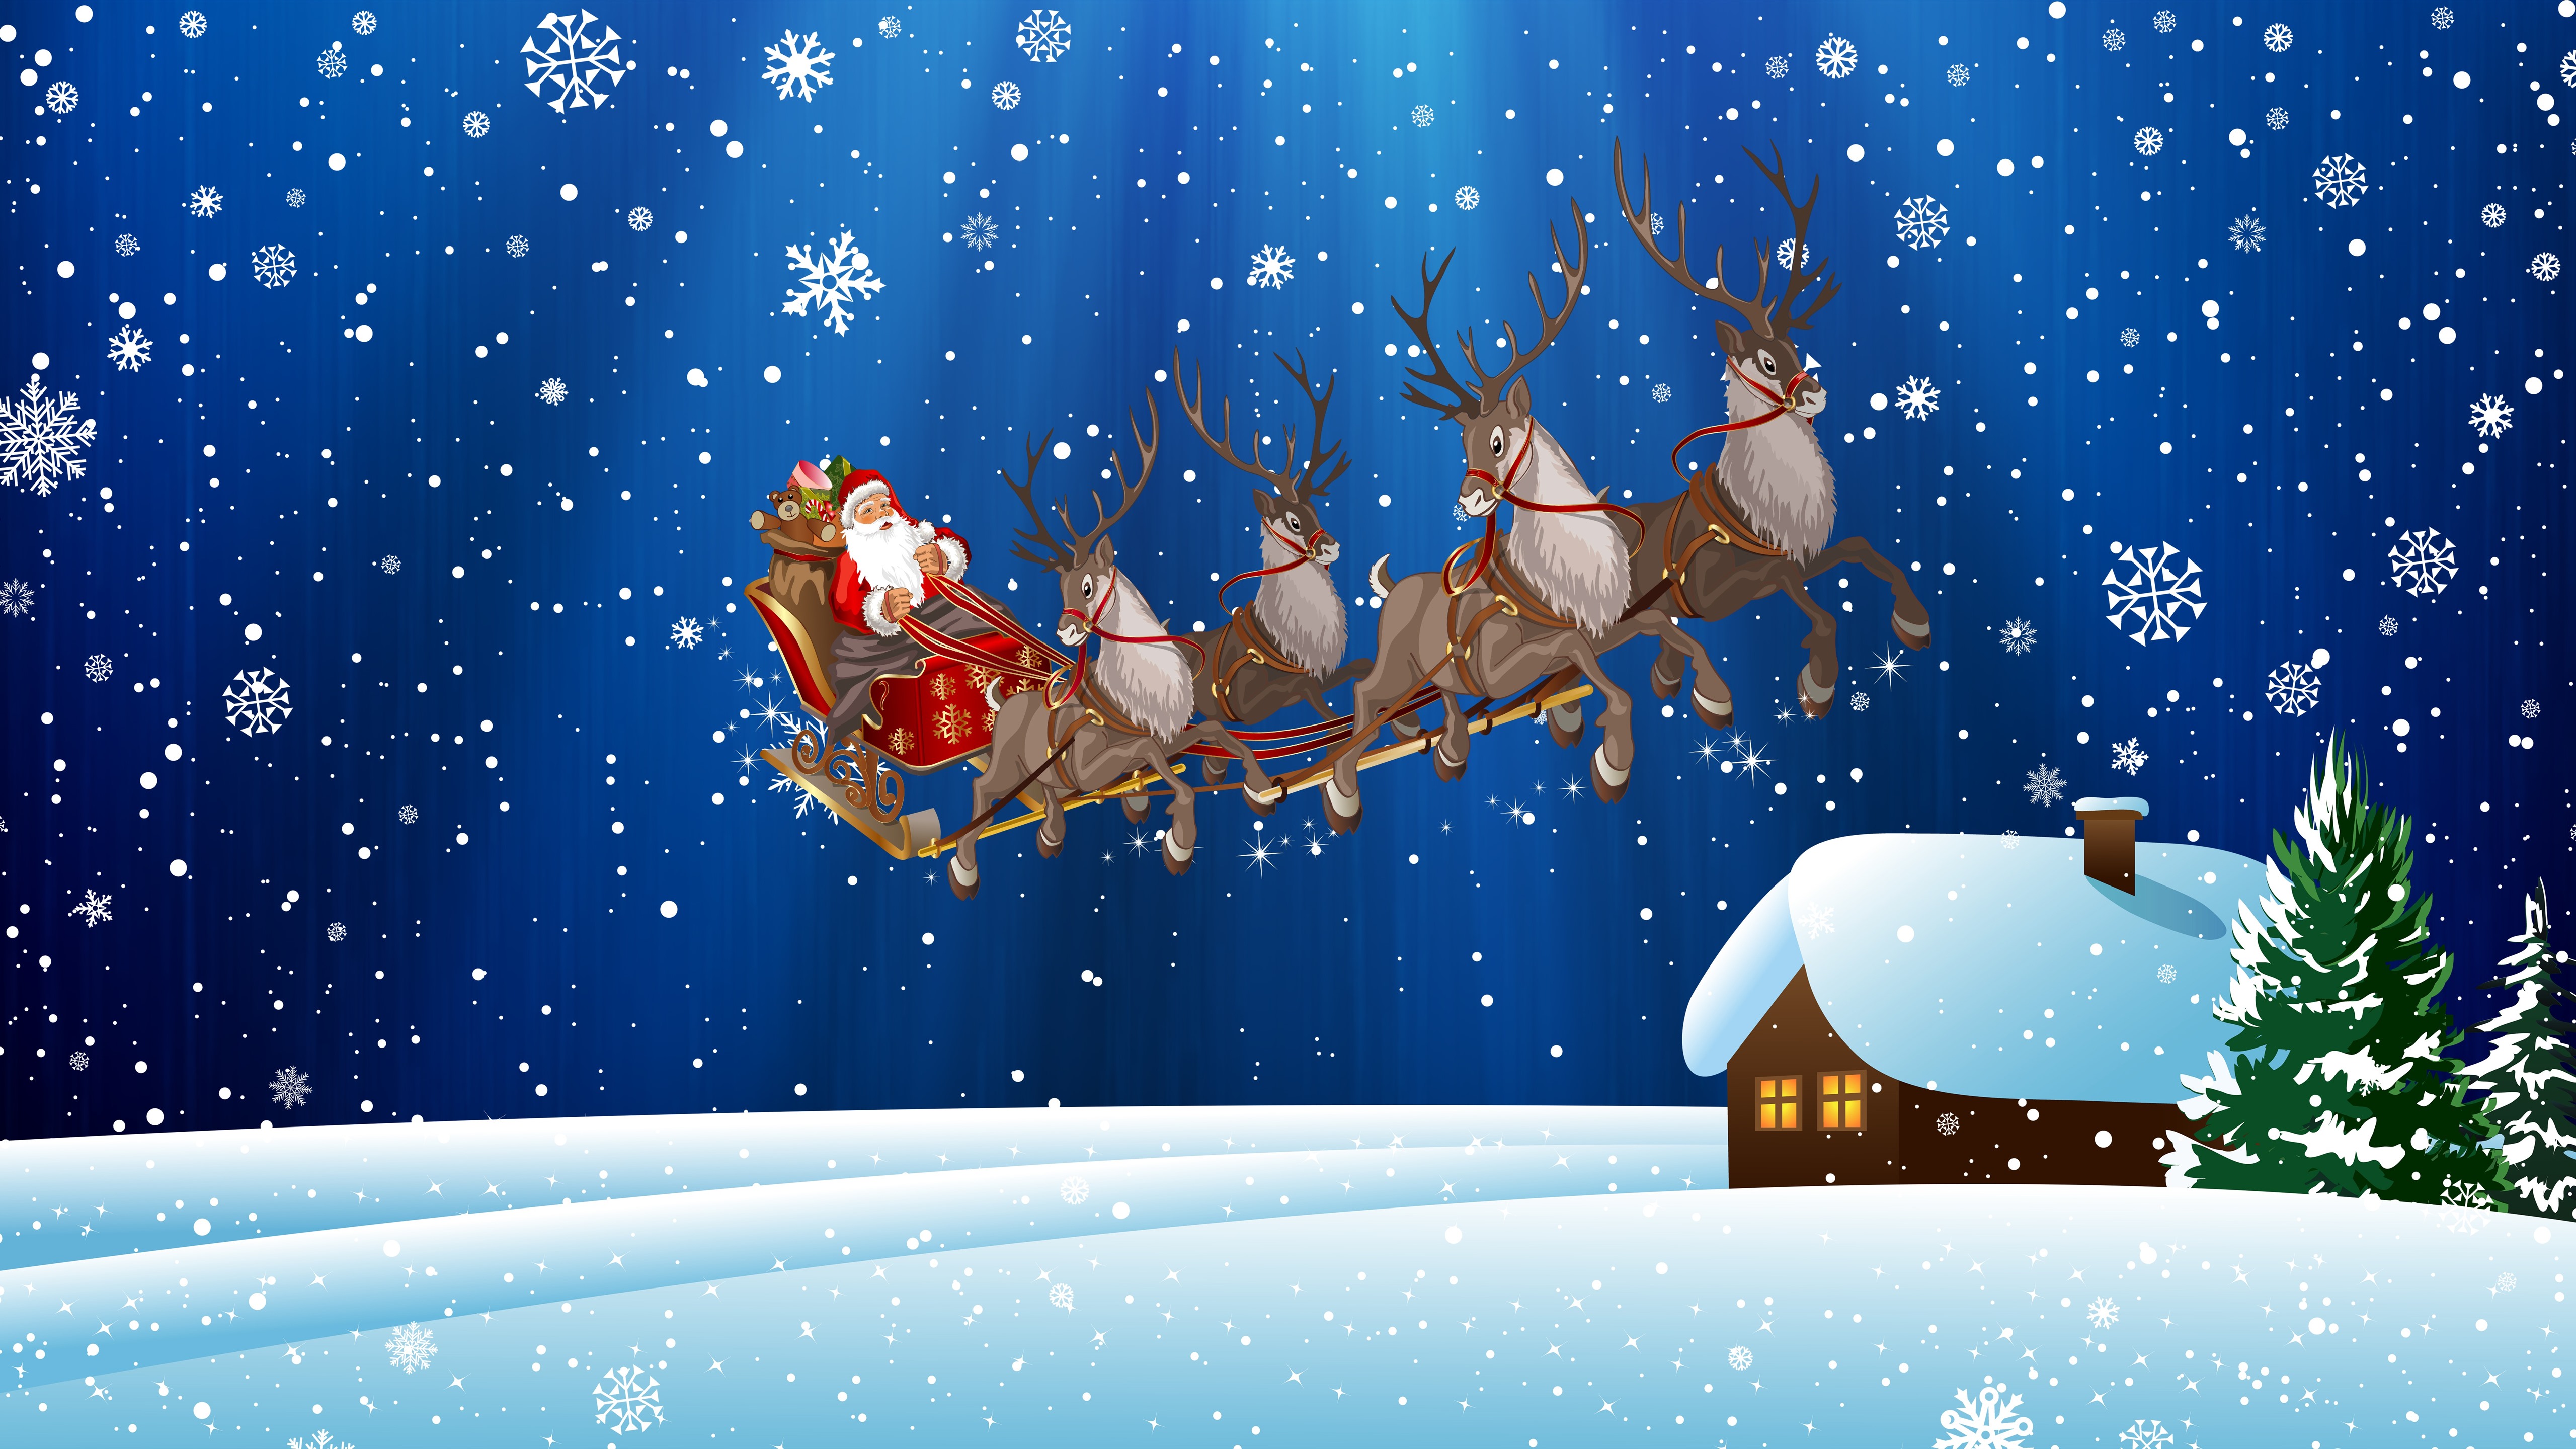 Wallpaper Christmas, Santa Claus, snowflakes, snow, deer